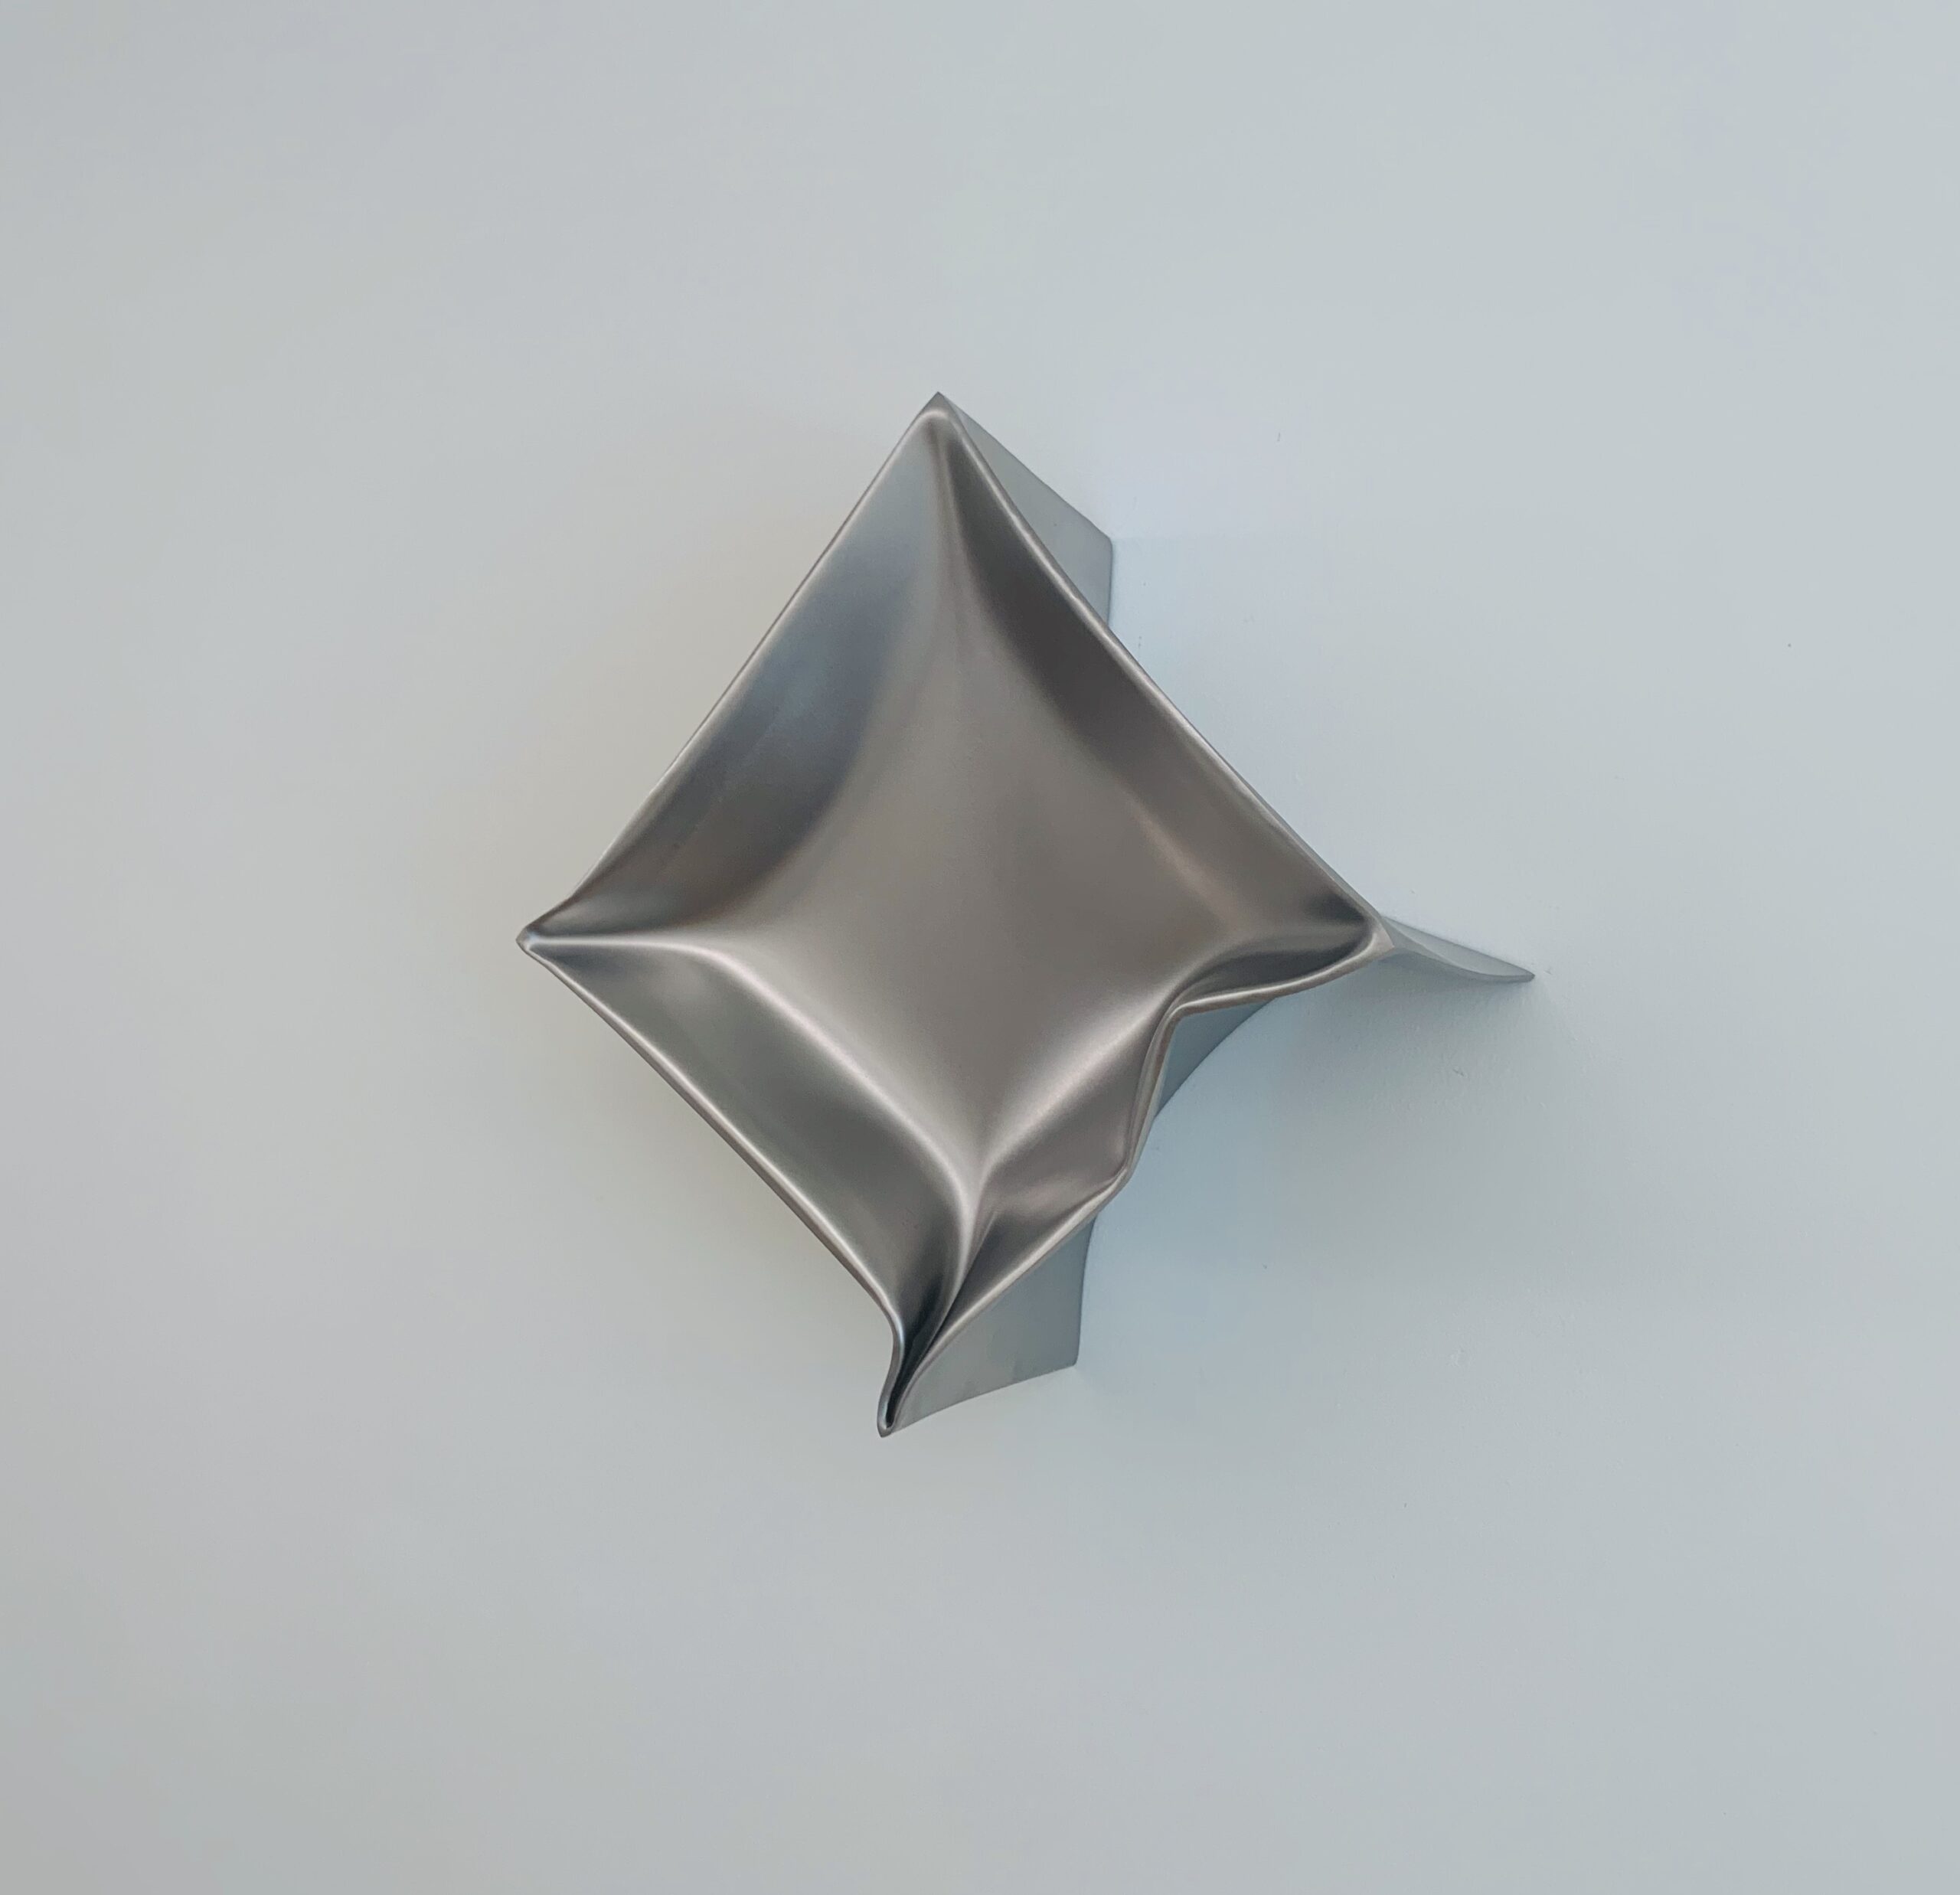 Ewerdt Hilgemann, Half Cube (Flying Object), 2020